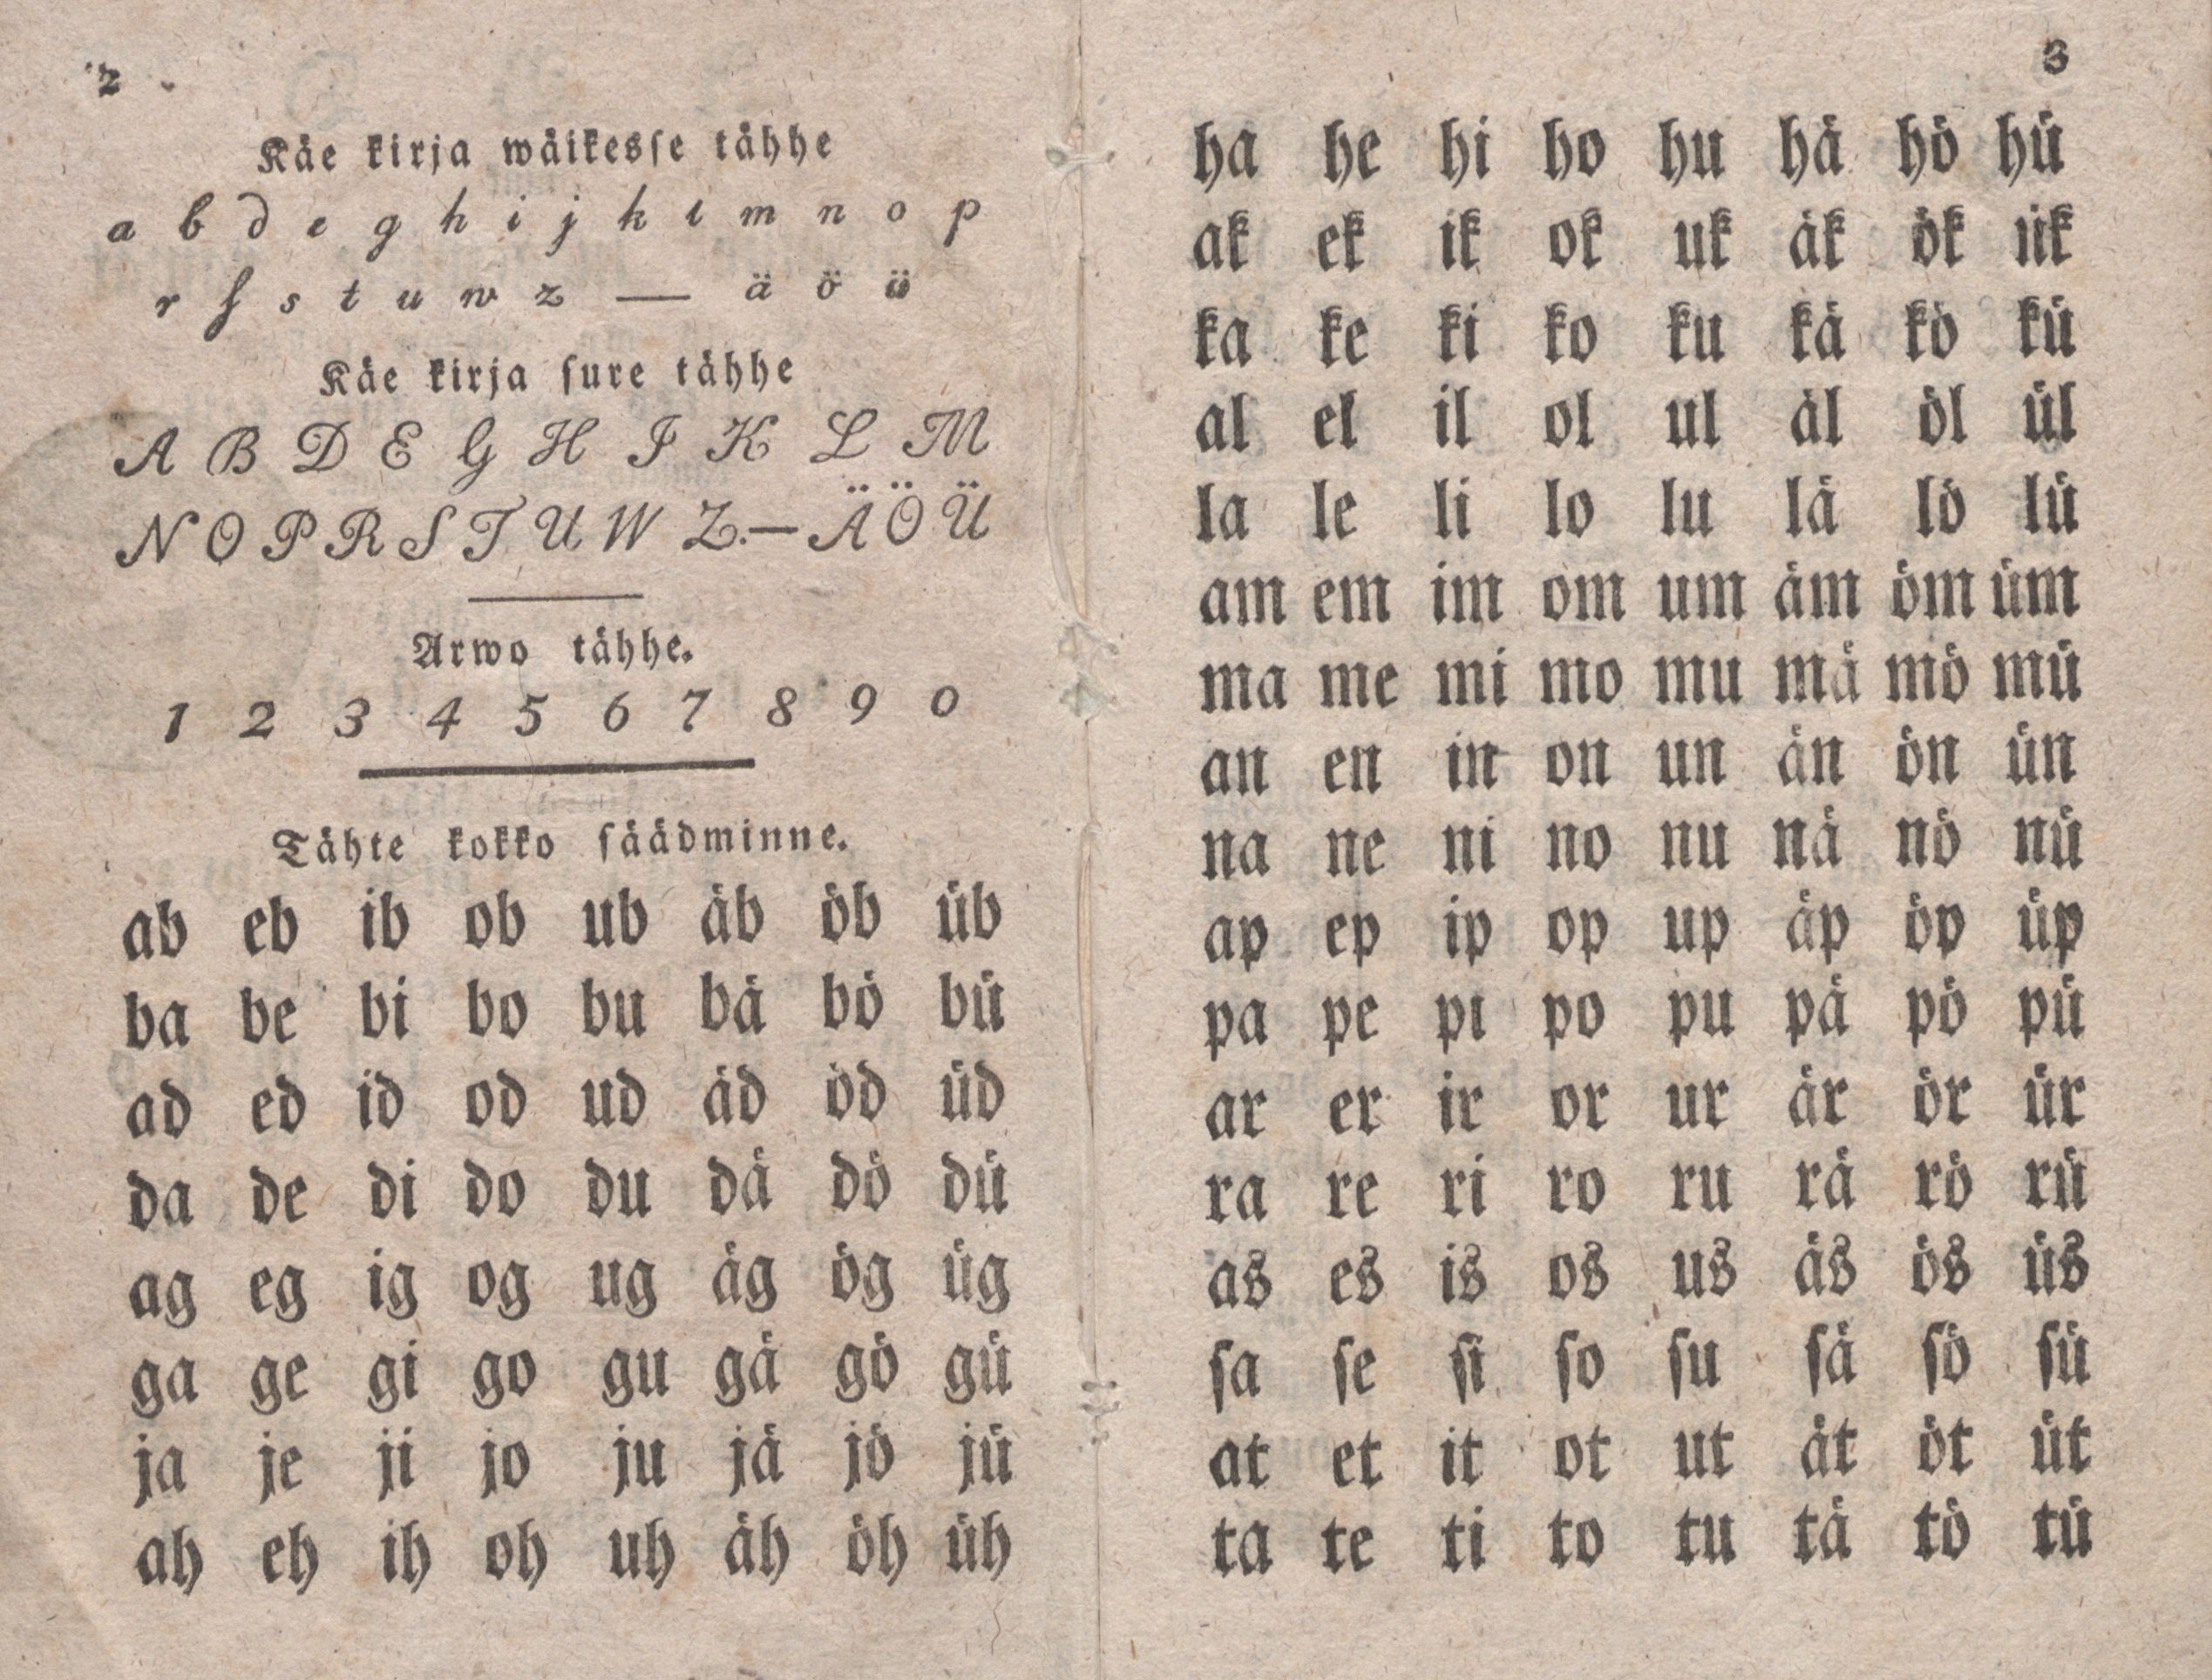 ABD nink wäikenne luggemisse ramat (1815) | 3. (2-3) Main body of text